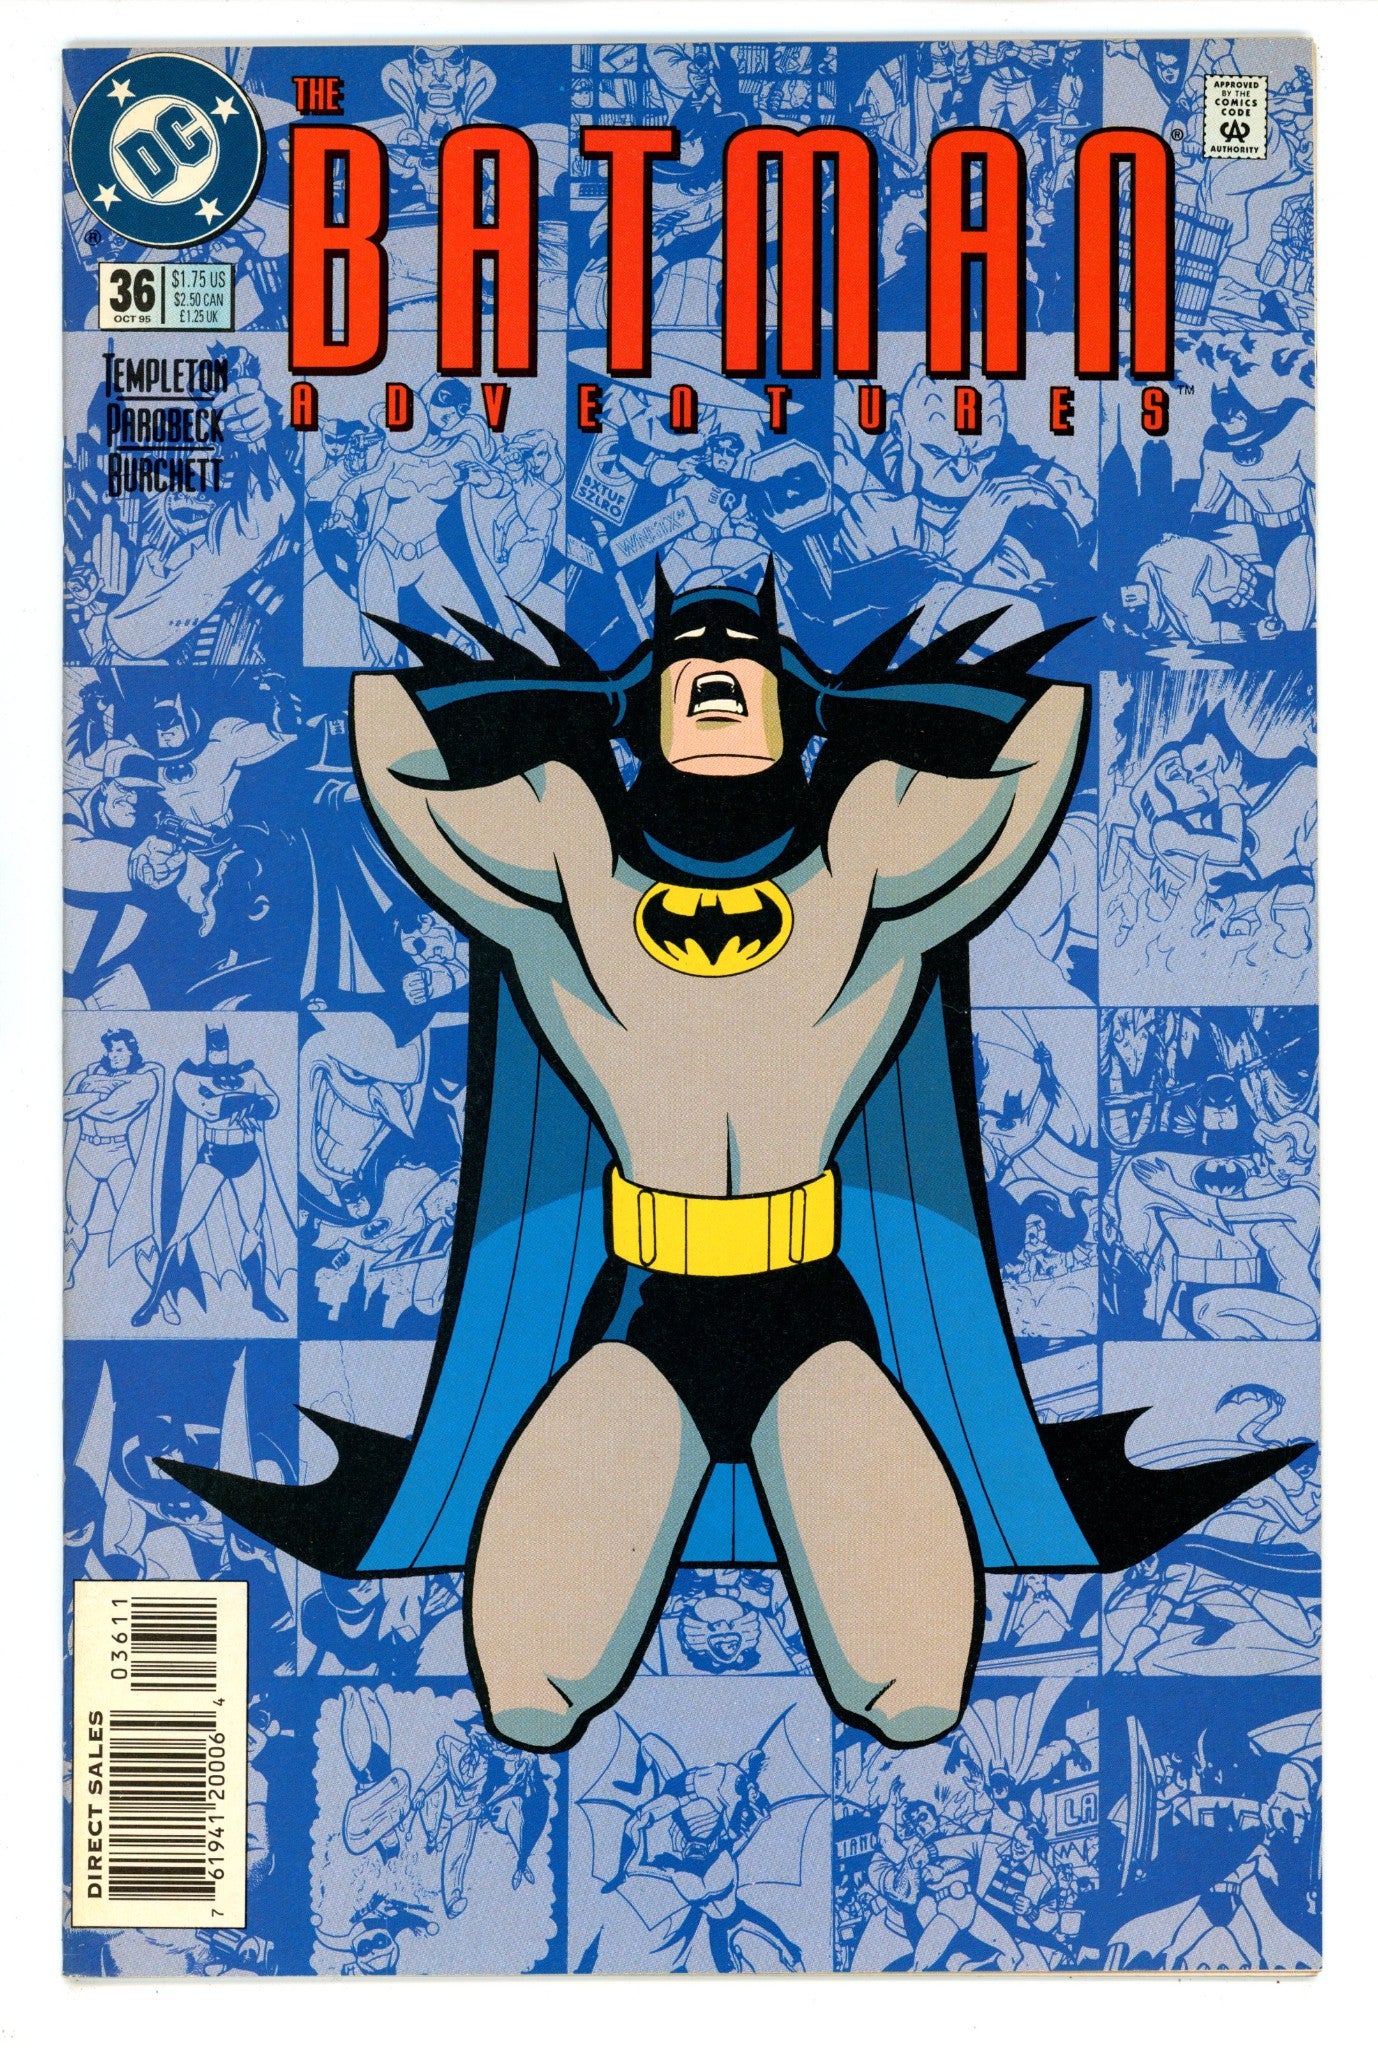 The Batman Adventures Vol 1 36 VF/NM (9.0) (1995) 